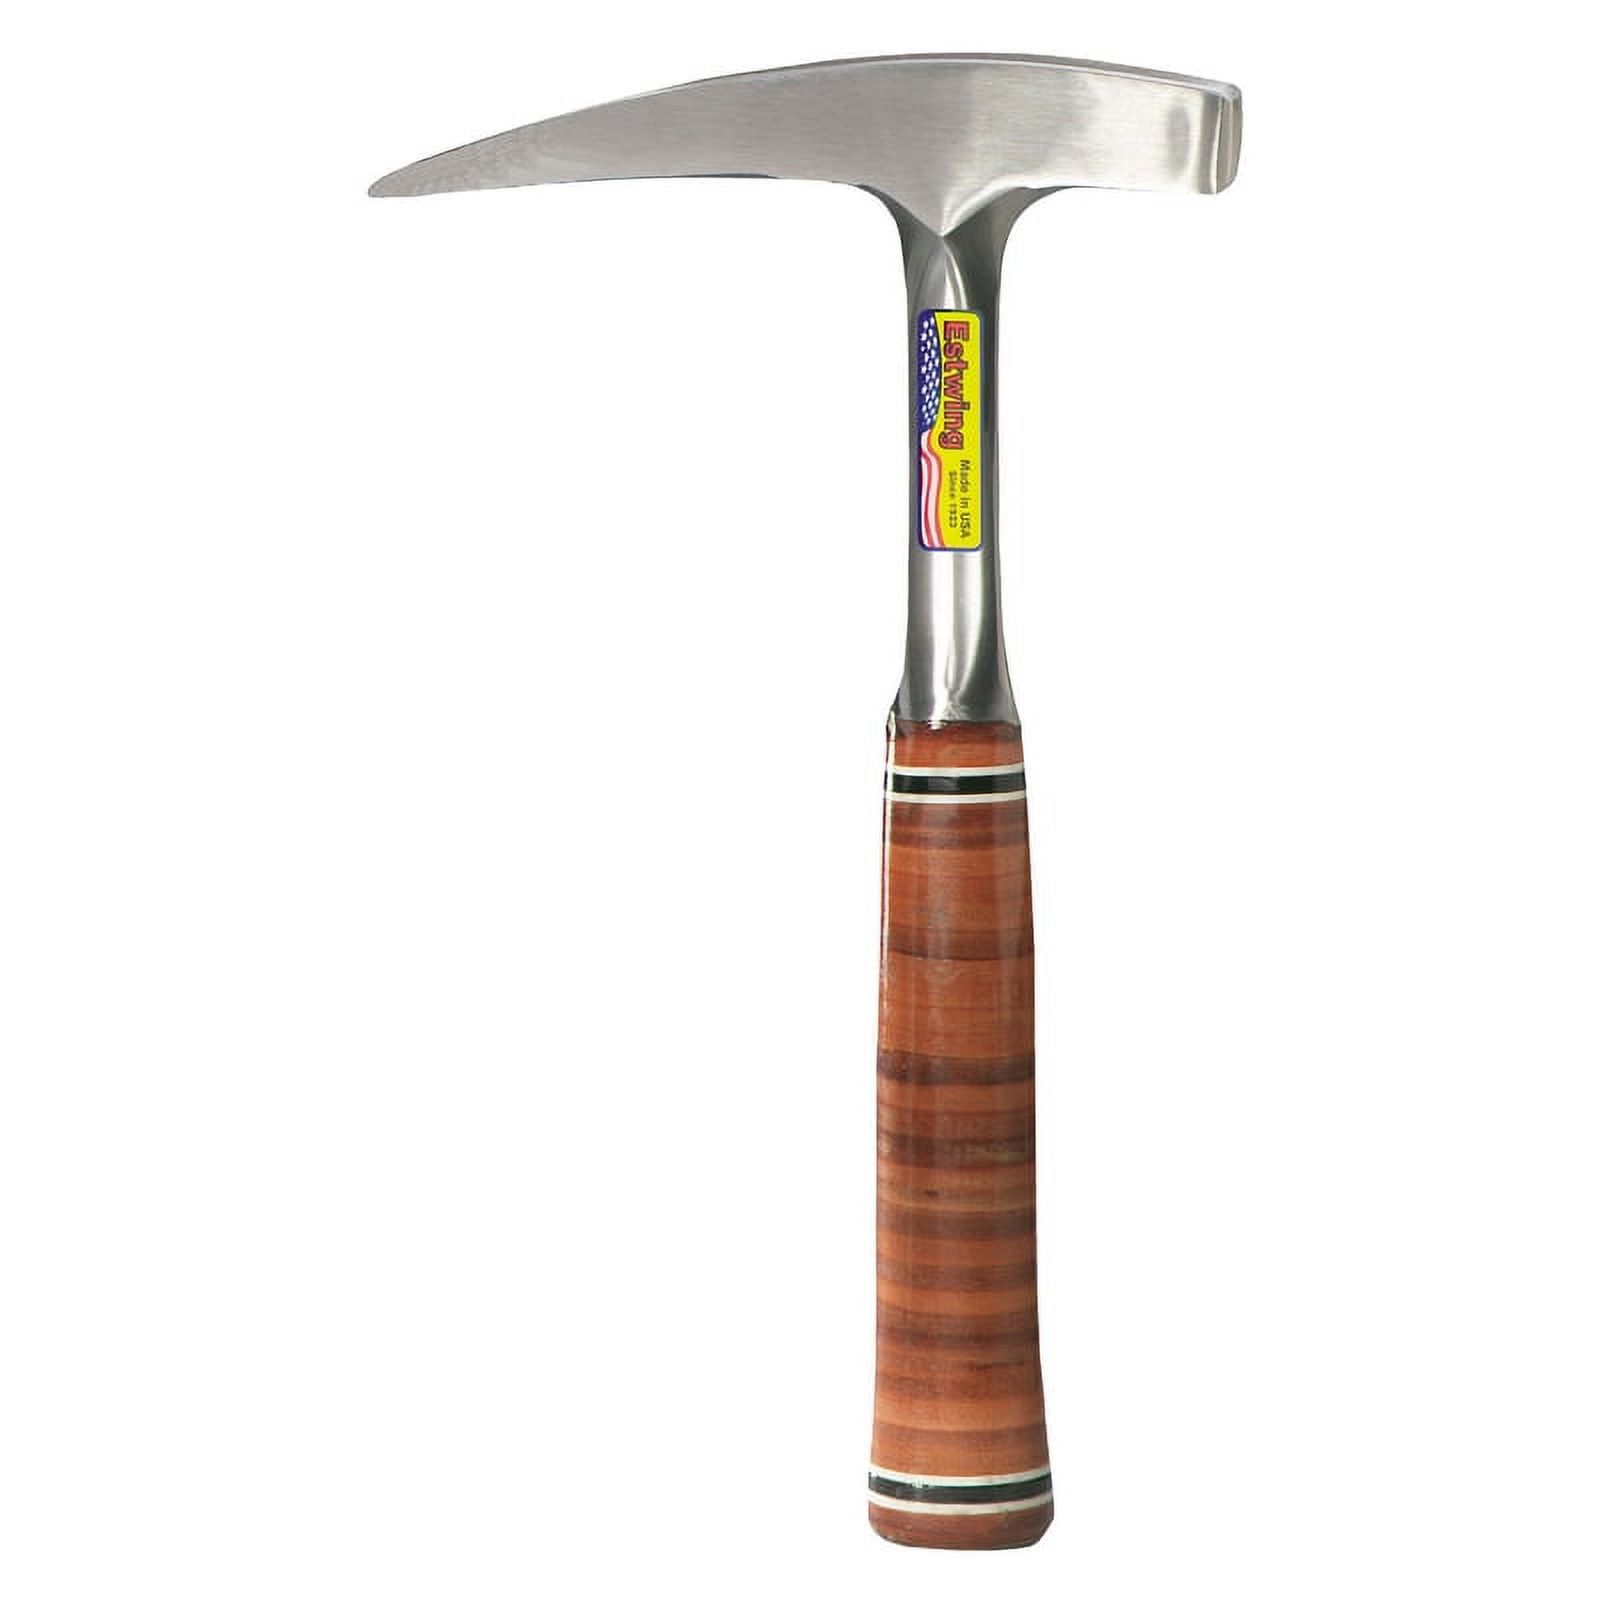 Estwing Rock Pick Hammer - image 1 of 2